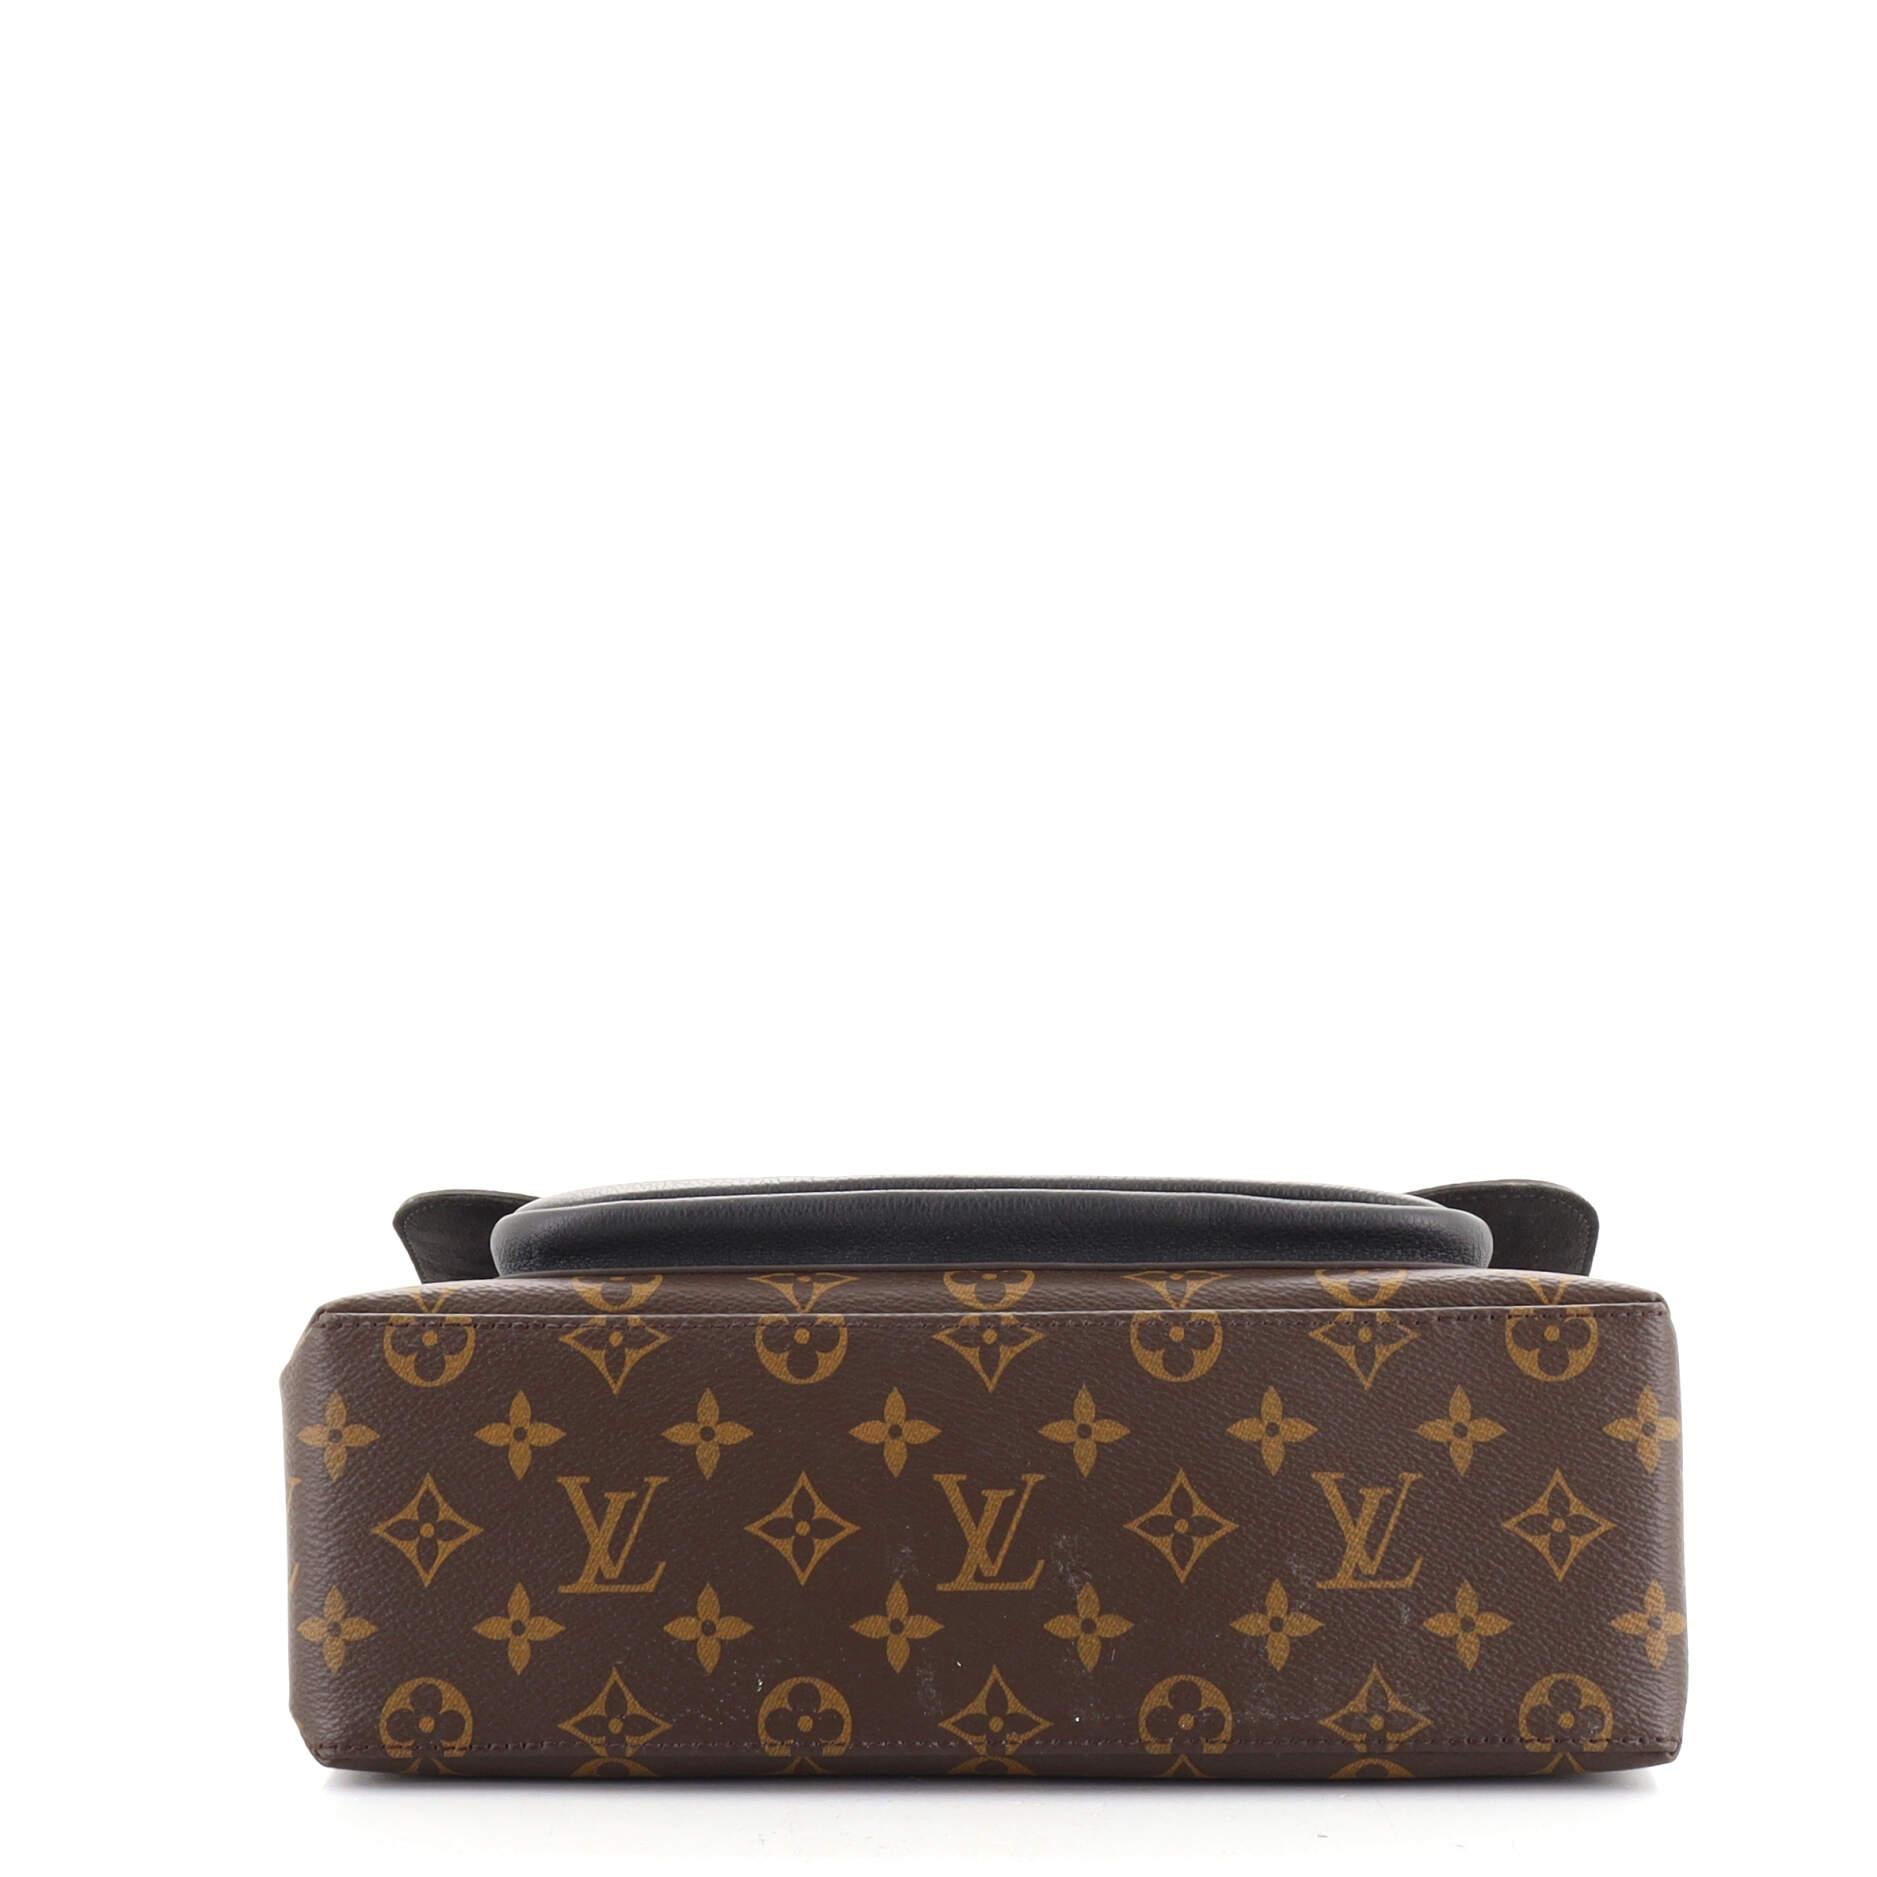 Black Louis Vuitton Marignan Handbag Monogram Canvas with Leather